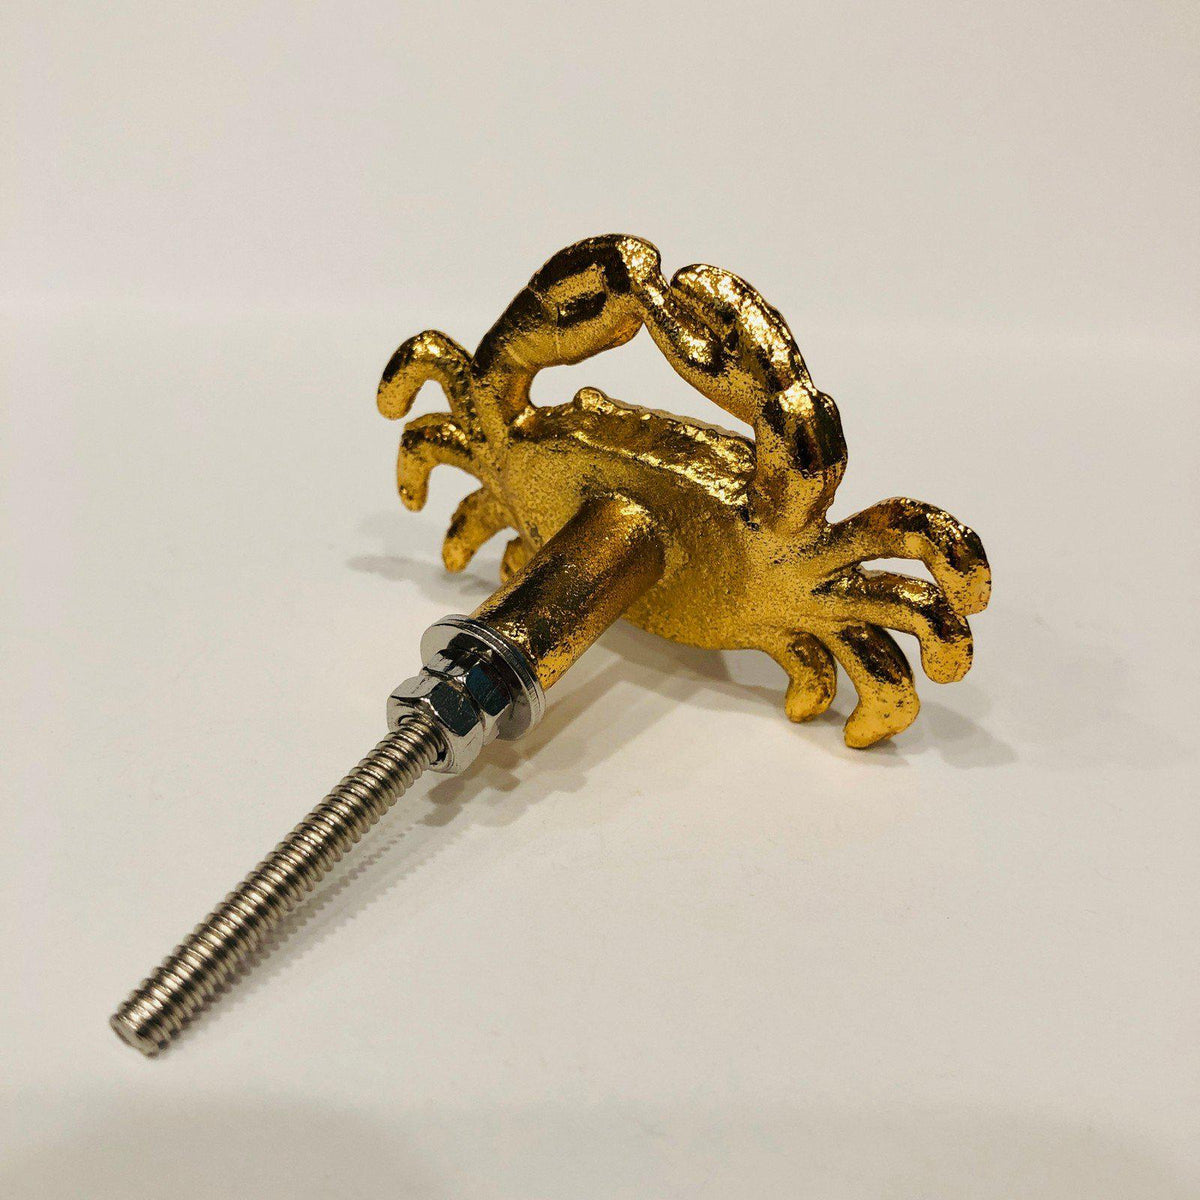 Golden Crab Cabinet Knobs Cast Iron Shellfish 1.75 Inch